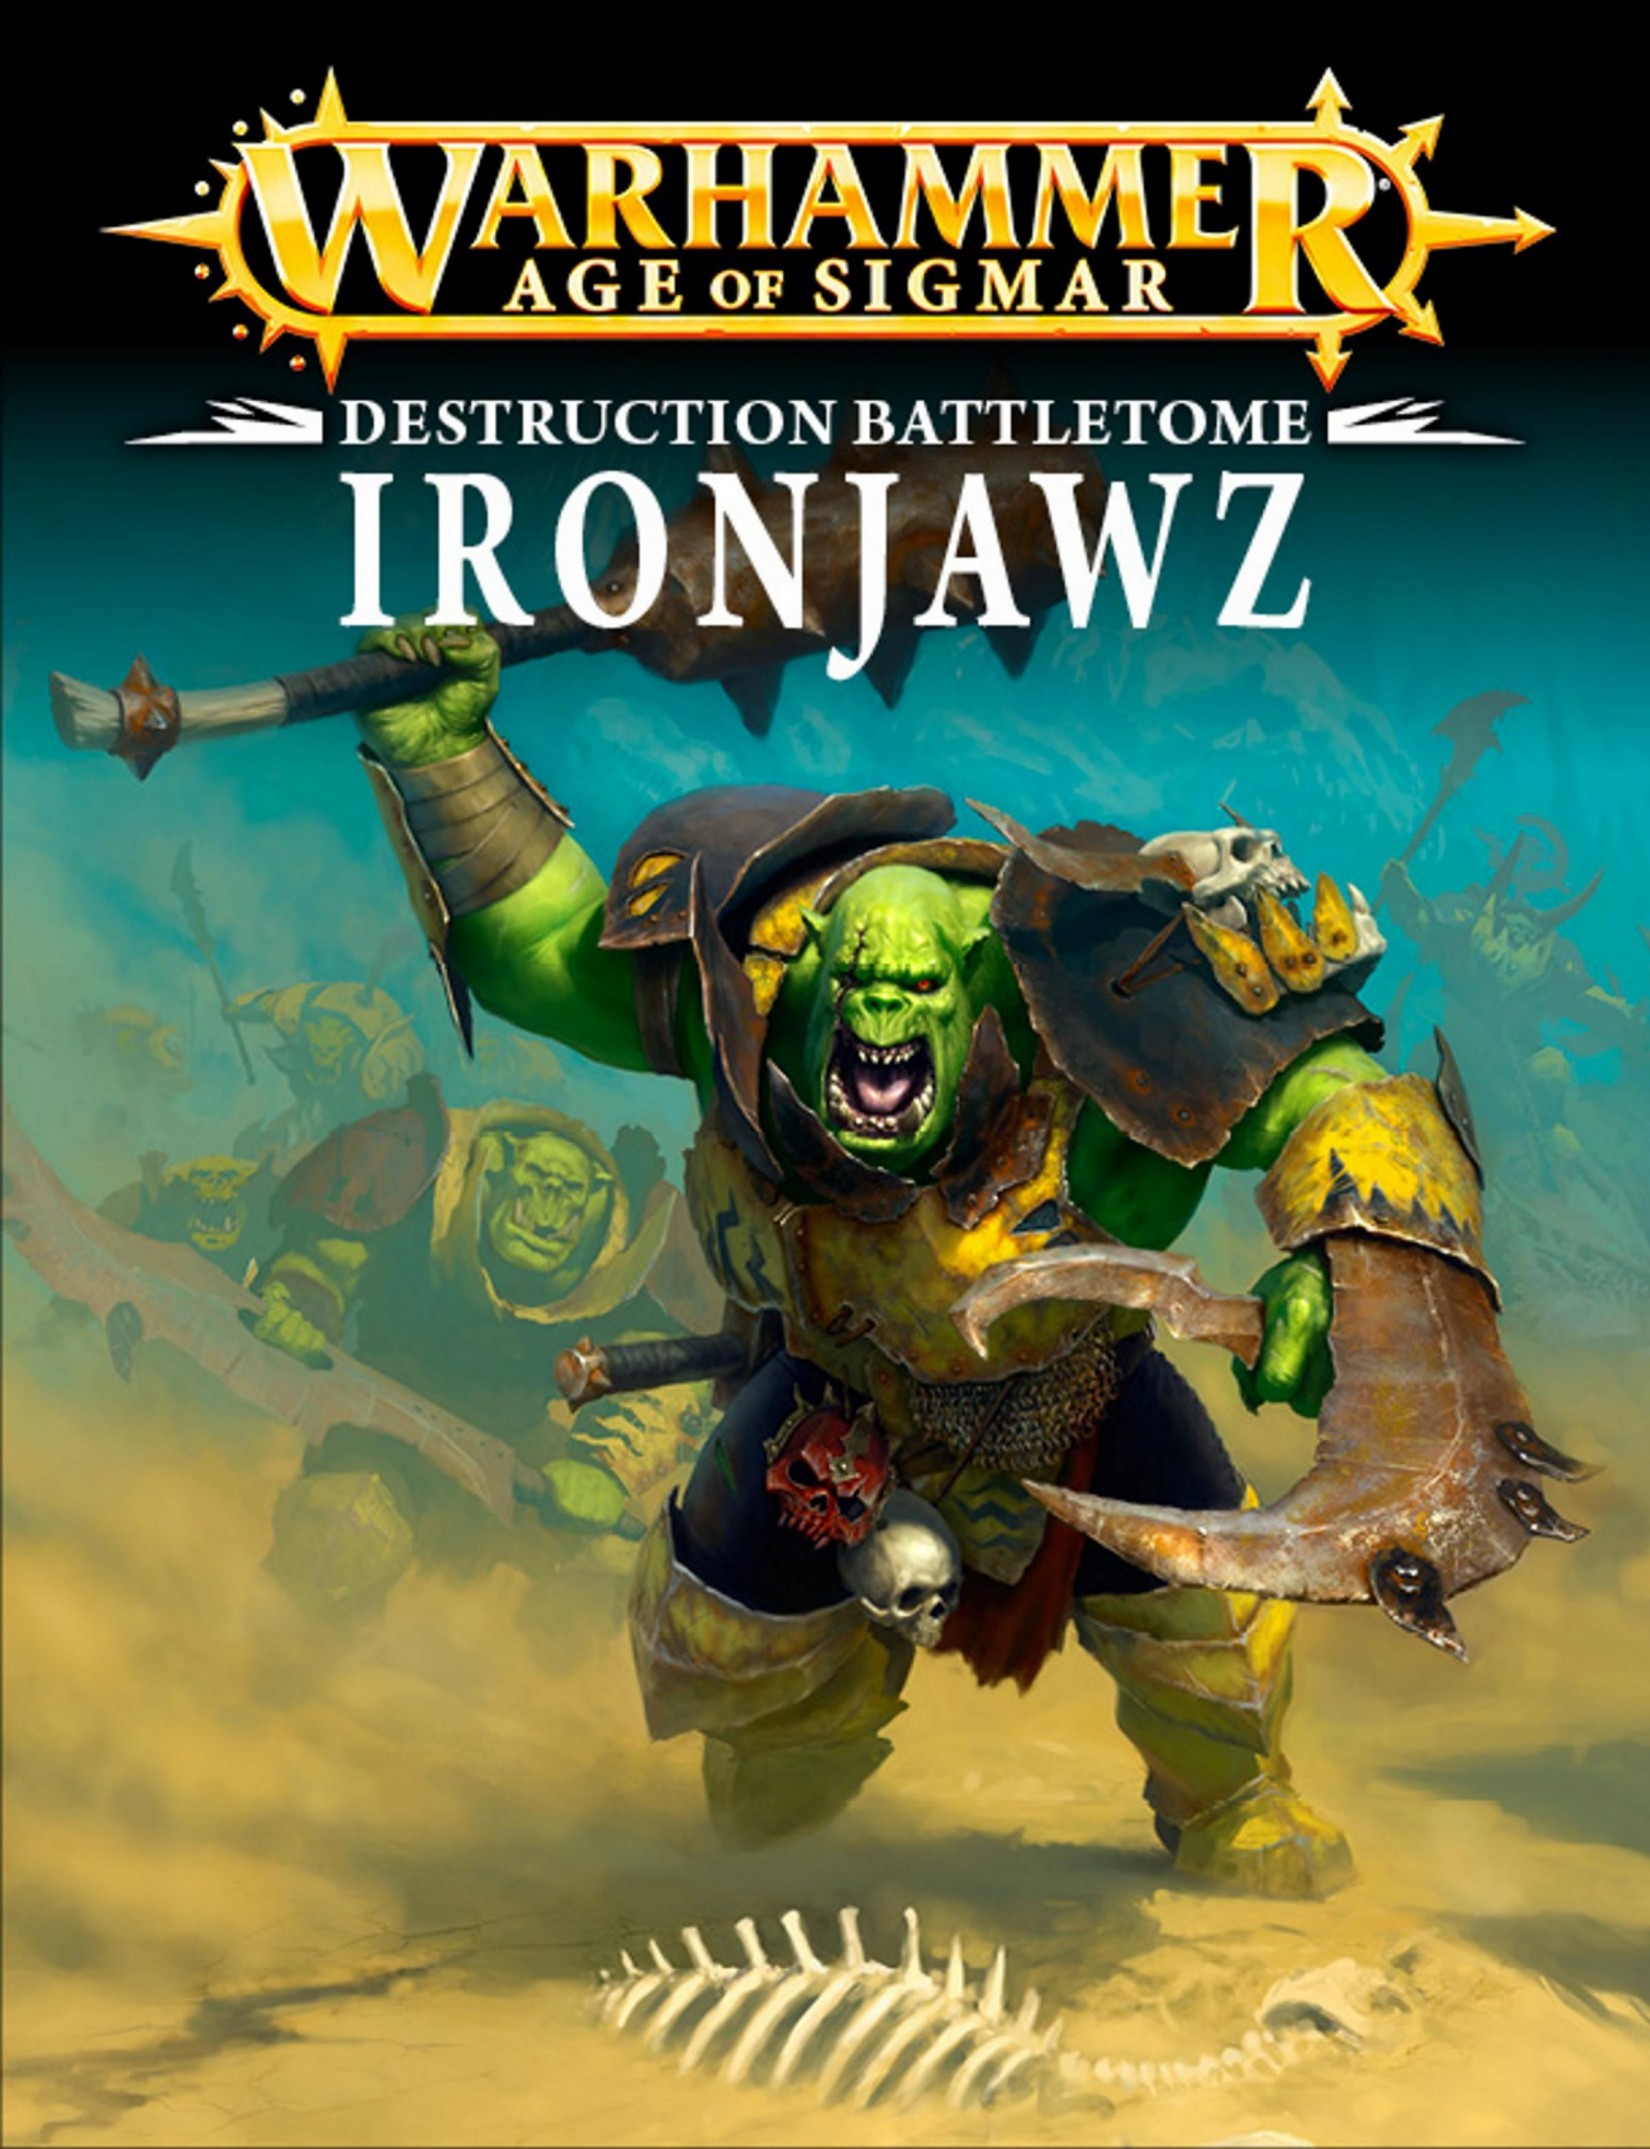 Warhammer Age of Sigmar: Destruction Battletome - Ironjawz